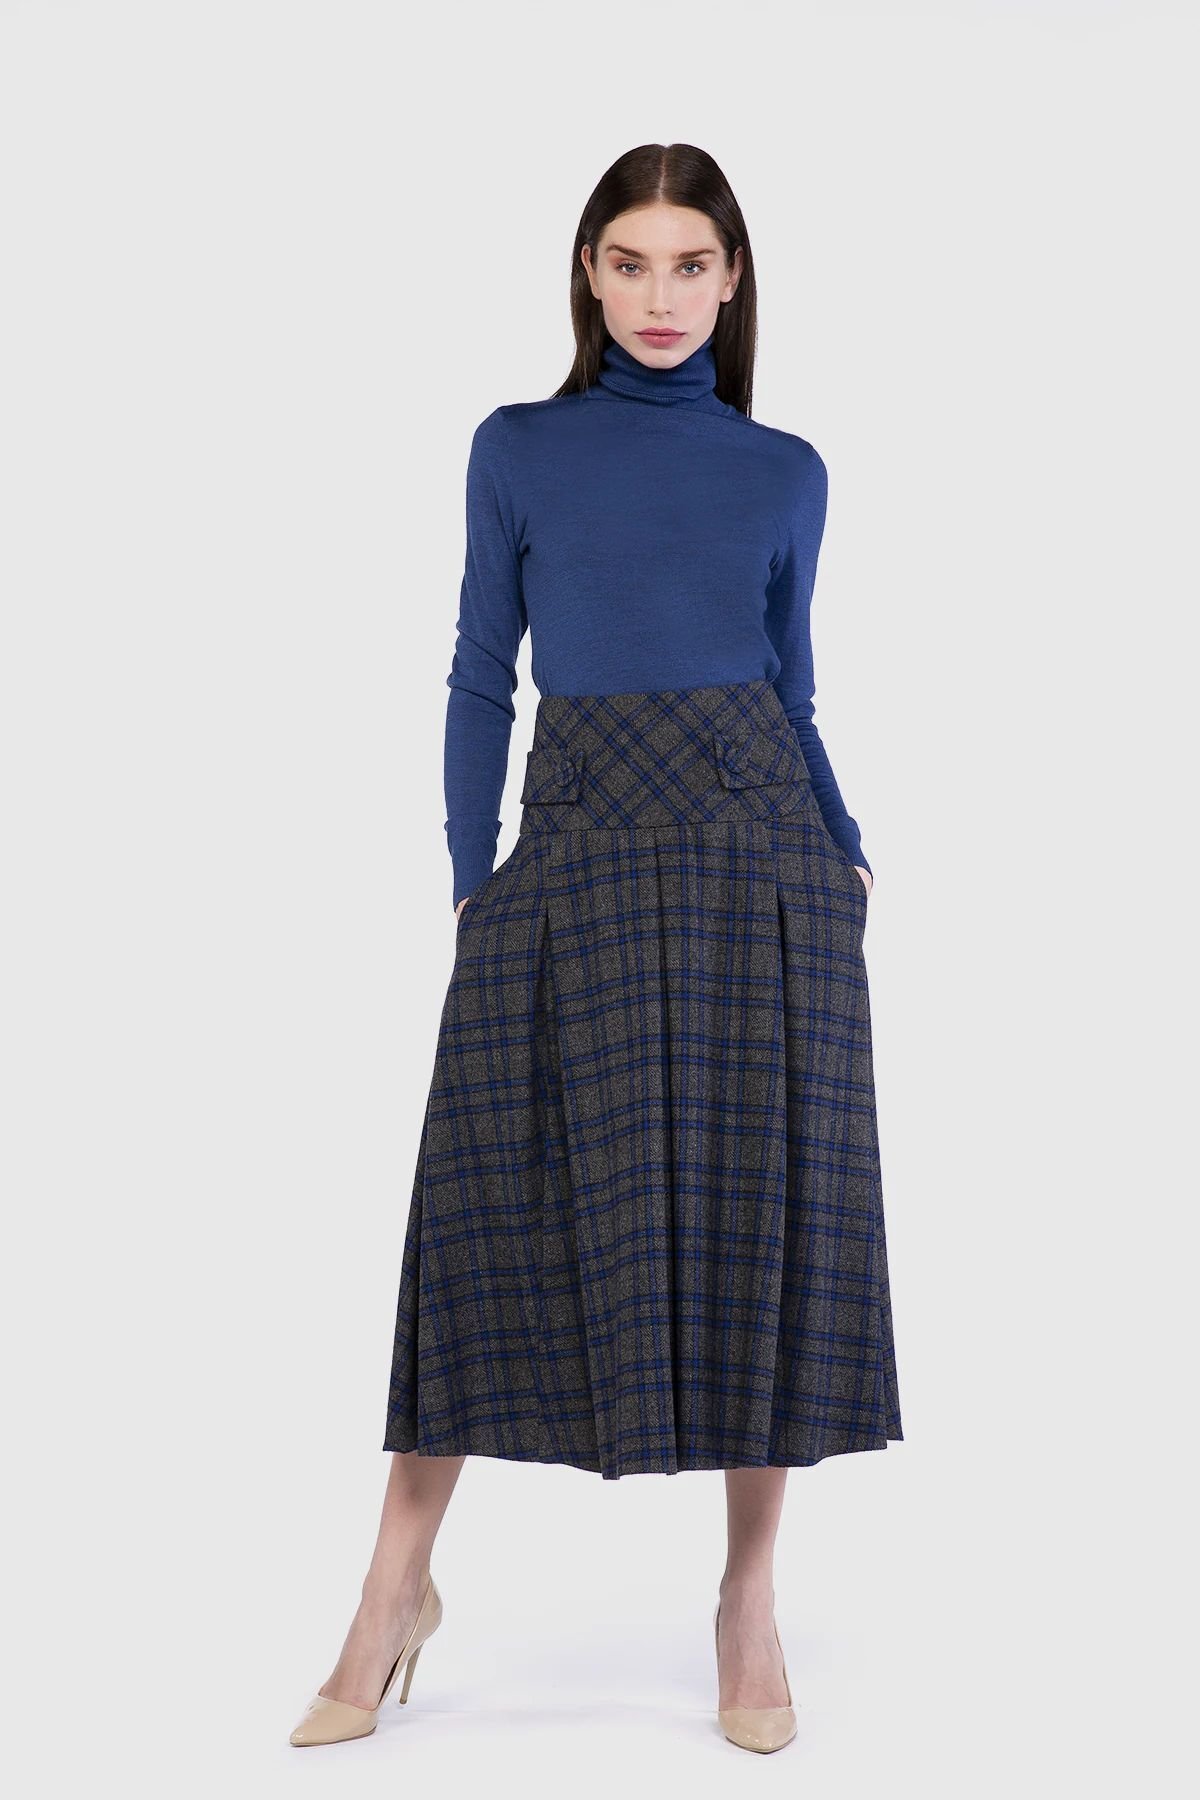 Wool Blend A-Line Skirt - Plaid | Talbots